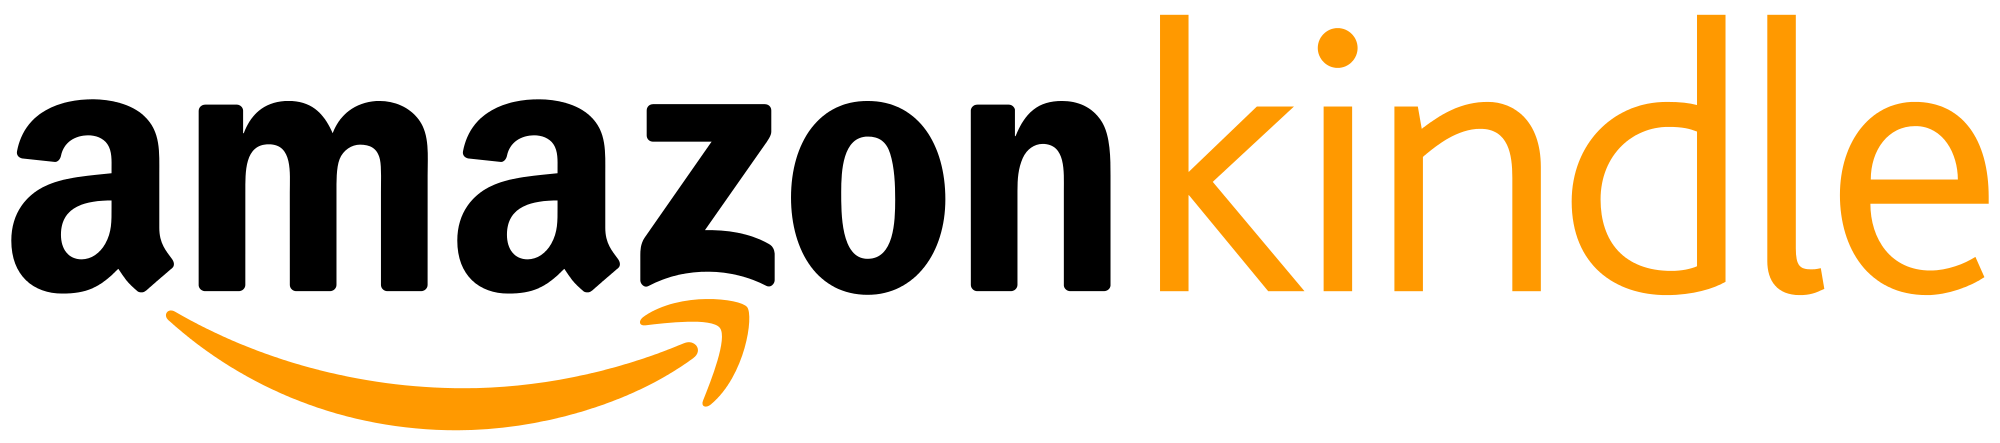 2000px-Amazon_Kindle_logo.svg.png